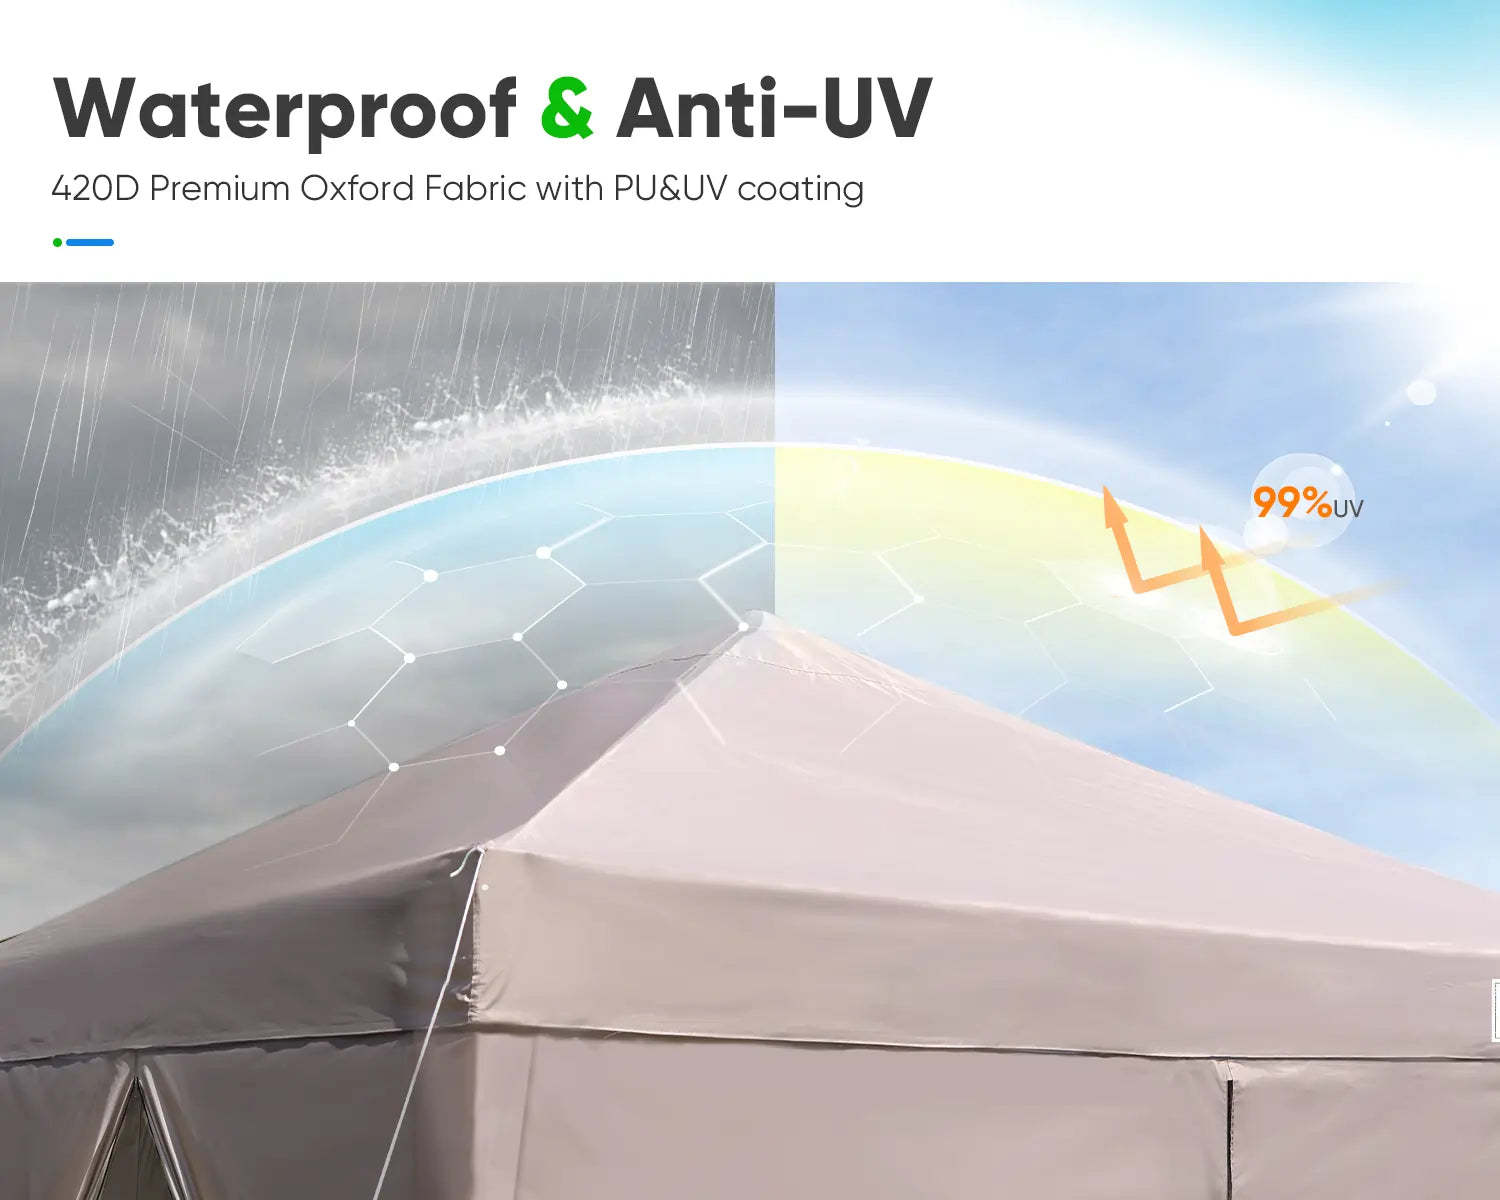 Waterproof & Anti-UV fabric of 10x10 canopy